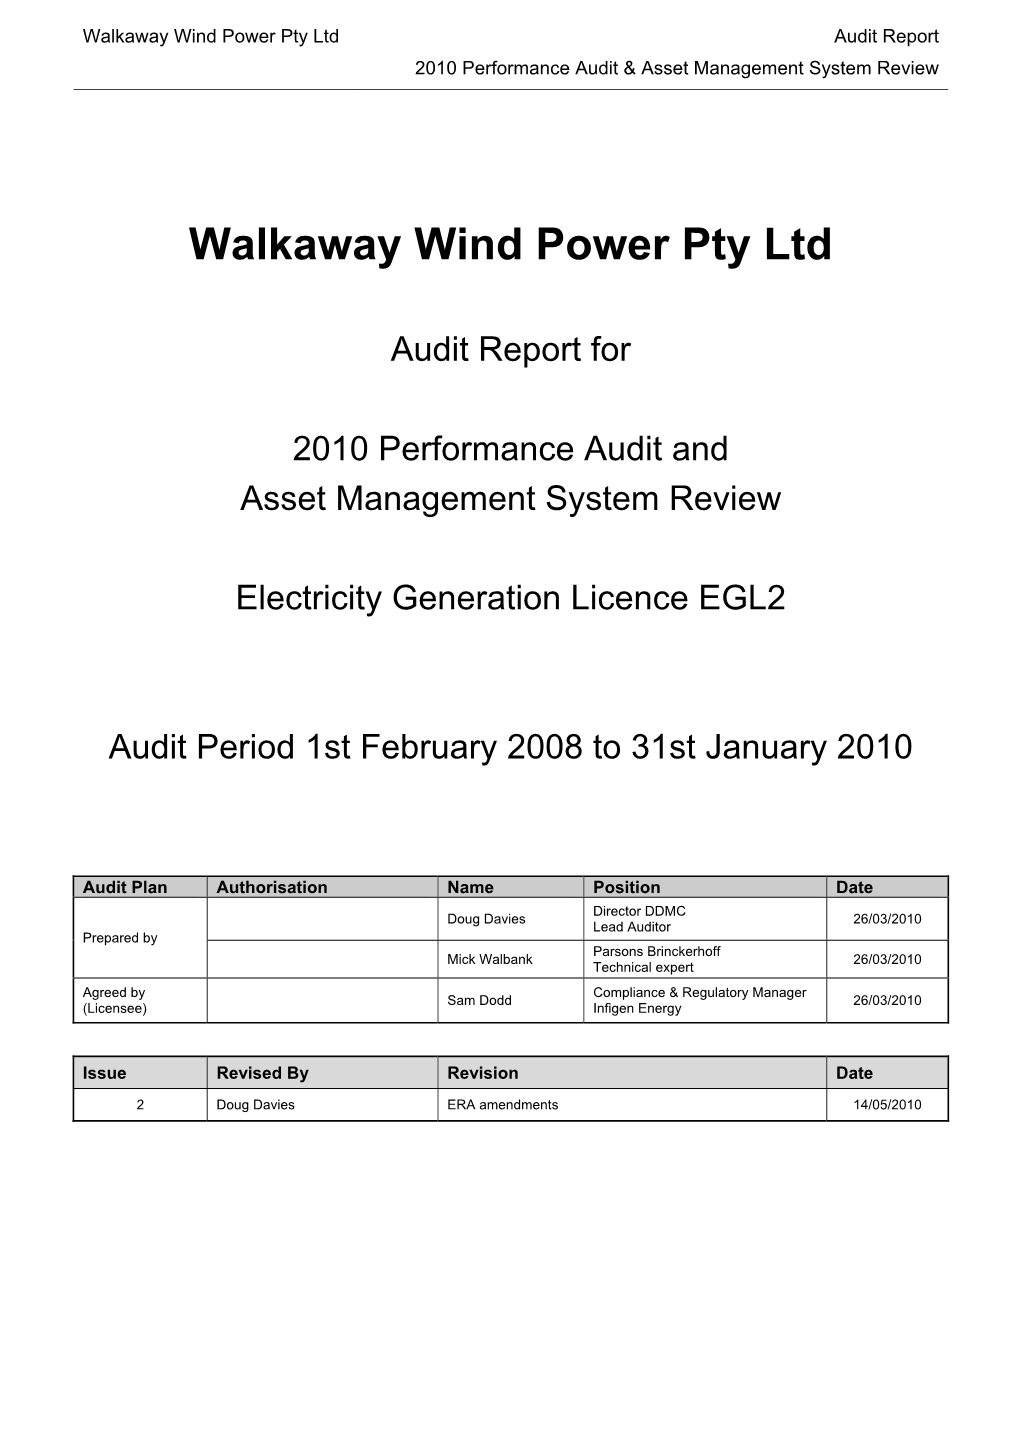 Walkaway Wind Power Pty Ltd Audit Report 2010 Performance Audit & Asset Management System Review